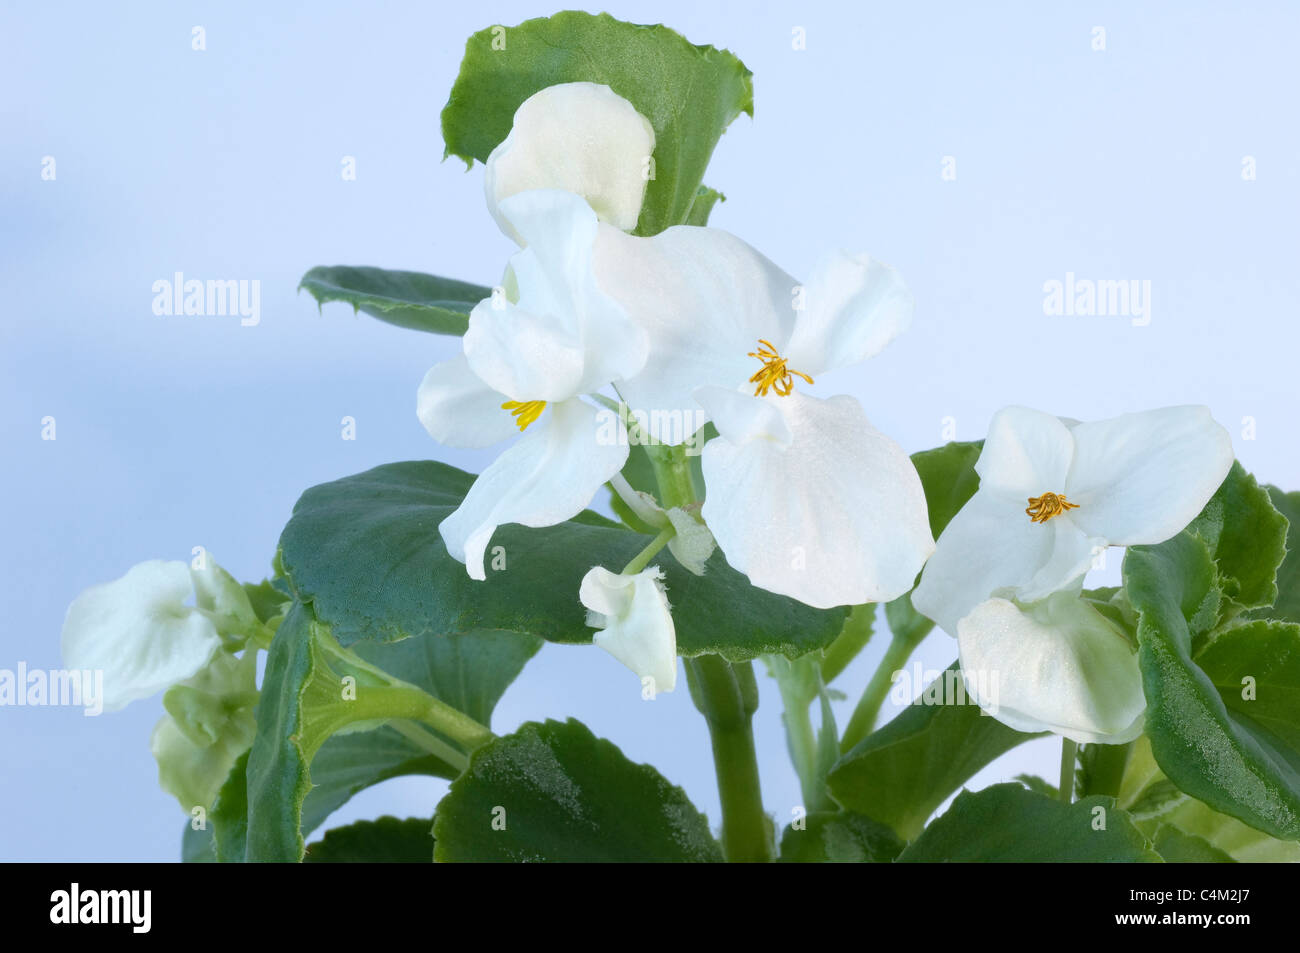 Wax Begonia, Wax-leaf Begonia (Begonia x semperfloren-cultorum), white flowering plant. Stock Photo